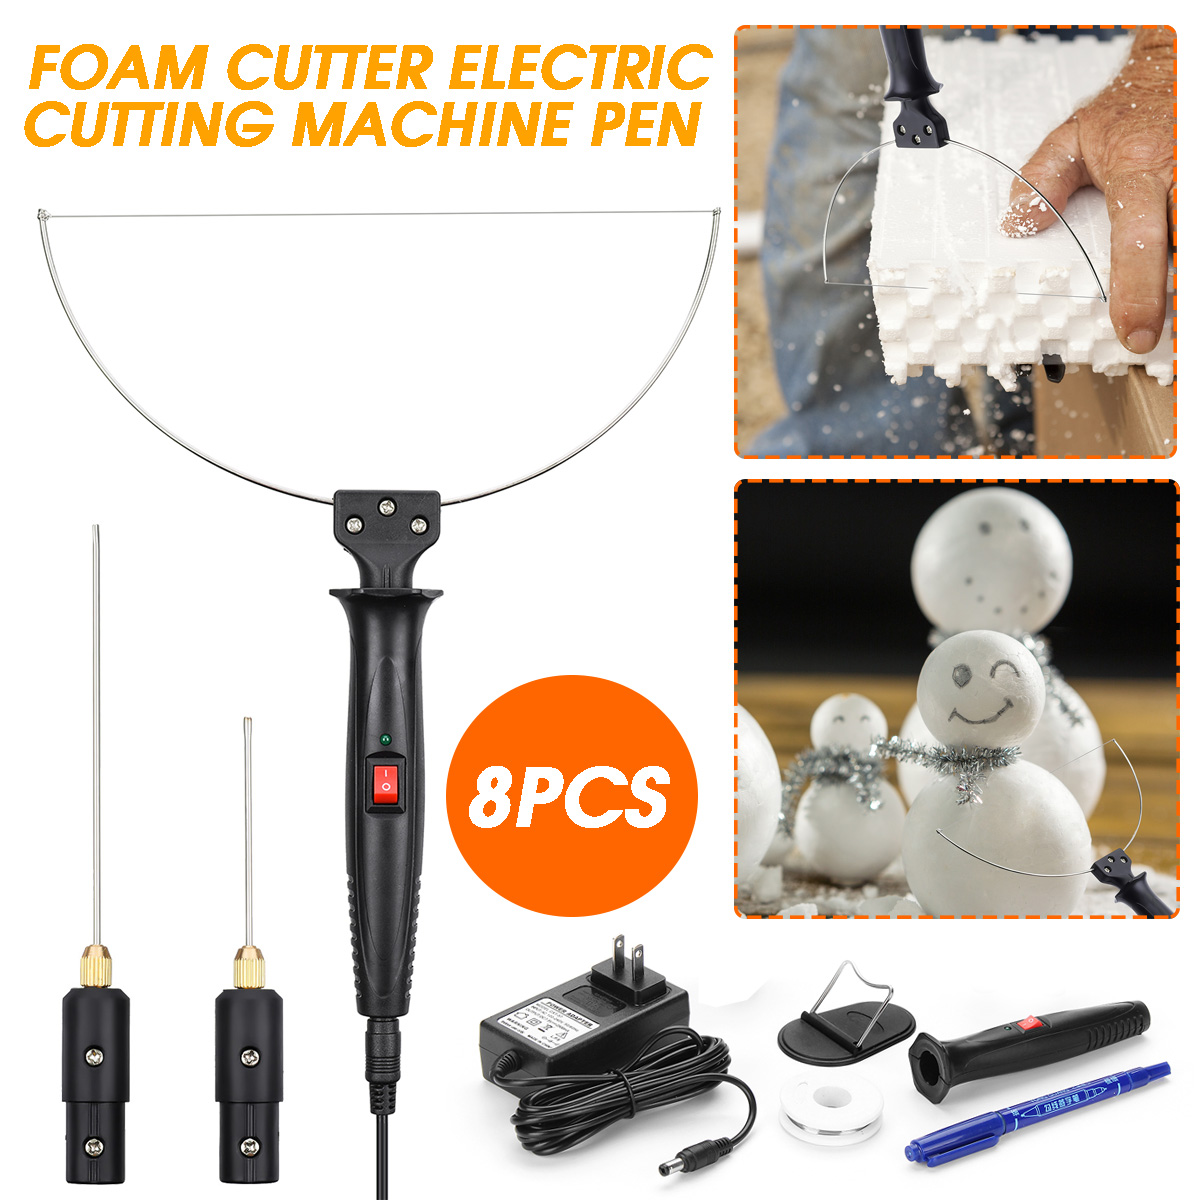 3-In-1-Foam-Cutter-Electric-Cutting-Machine-Pen-Tools-Kit-100-240V-18W-Styrofoam-Cutting-Pen-with-Po-1606273-1